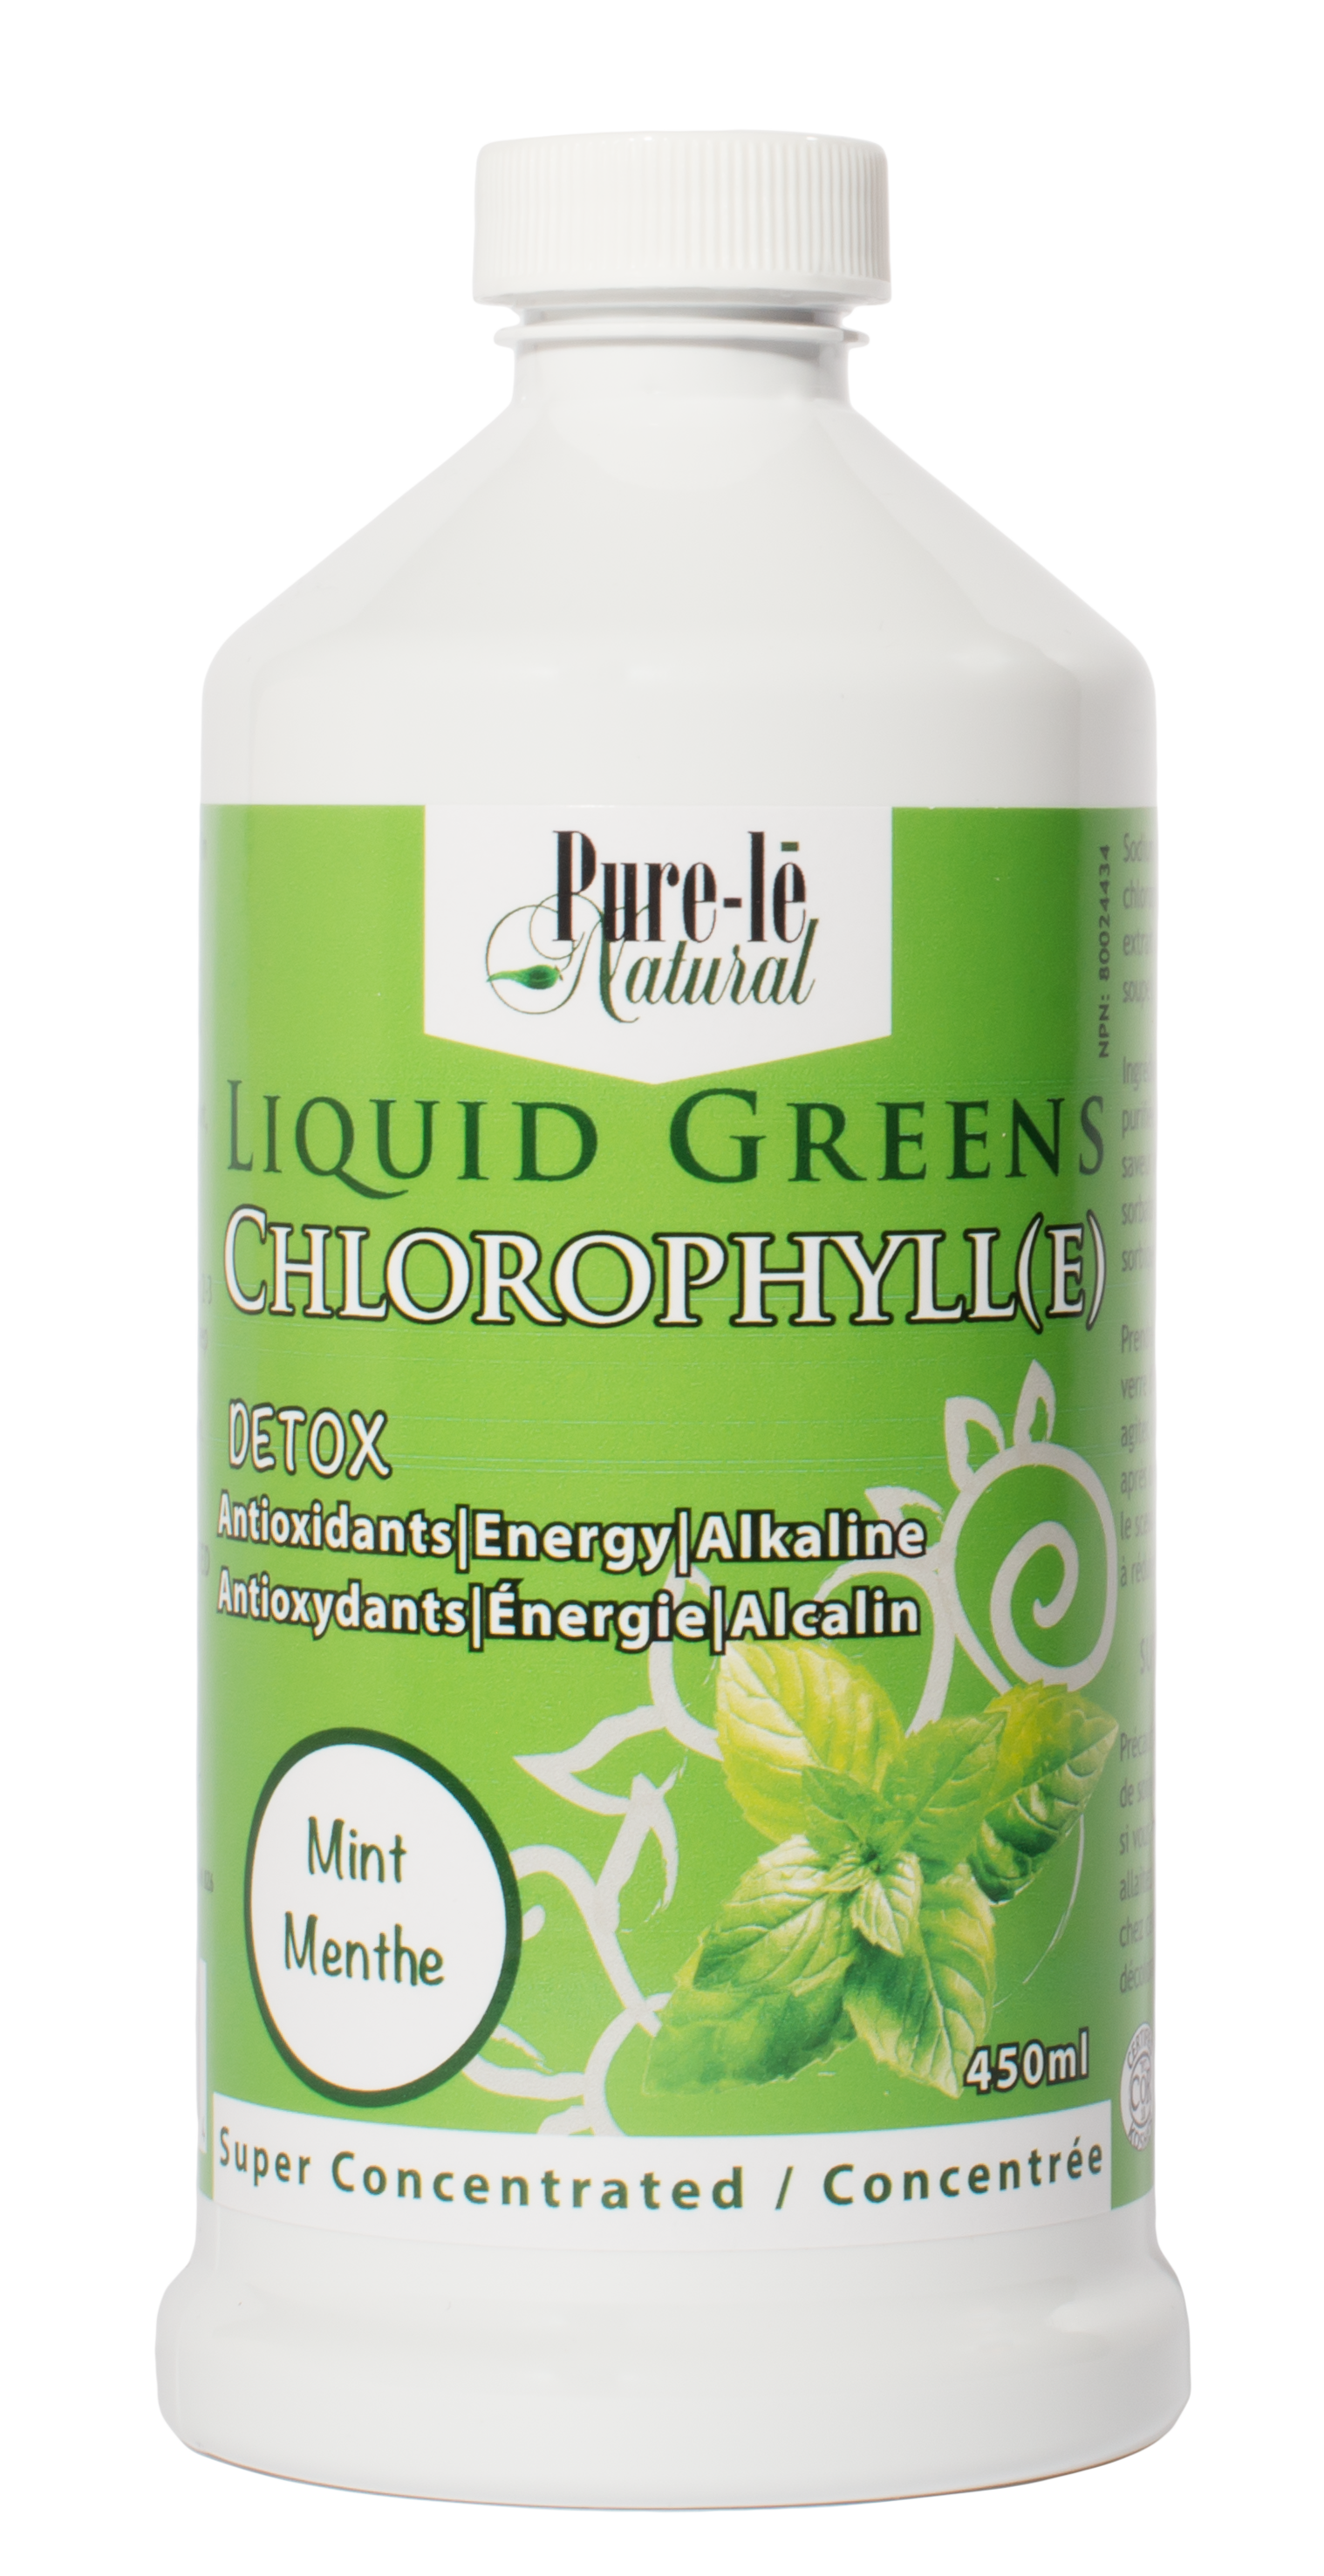 Pure-le Natural Liquid Greens Chlorophyll Mint - (450ml)